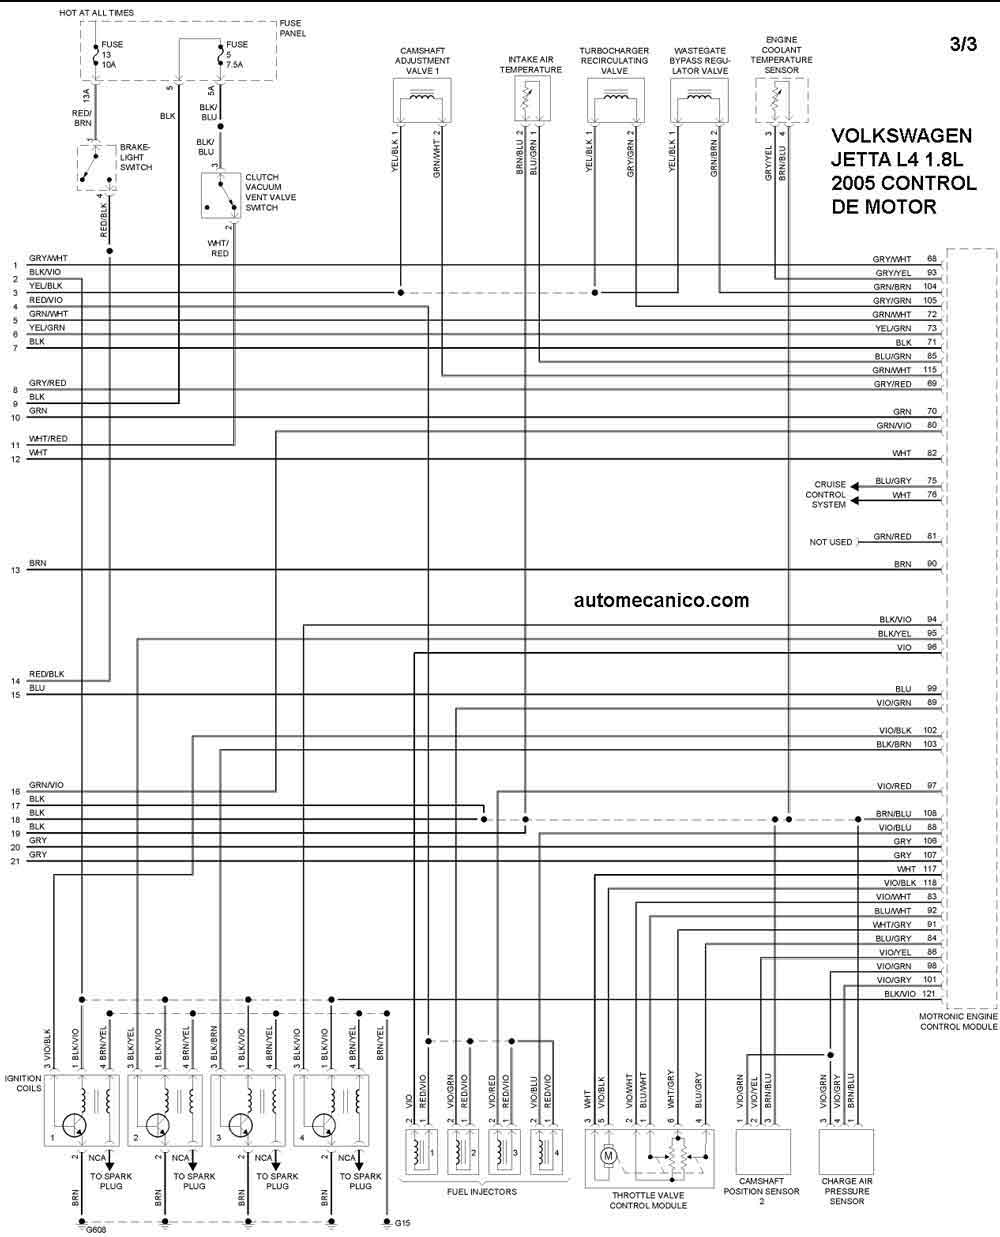 Diagrama de jetta 95 fusibles - Your diagrams today